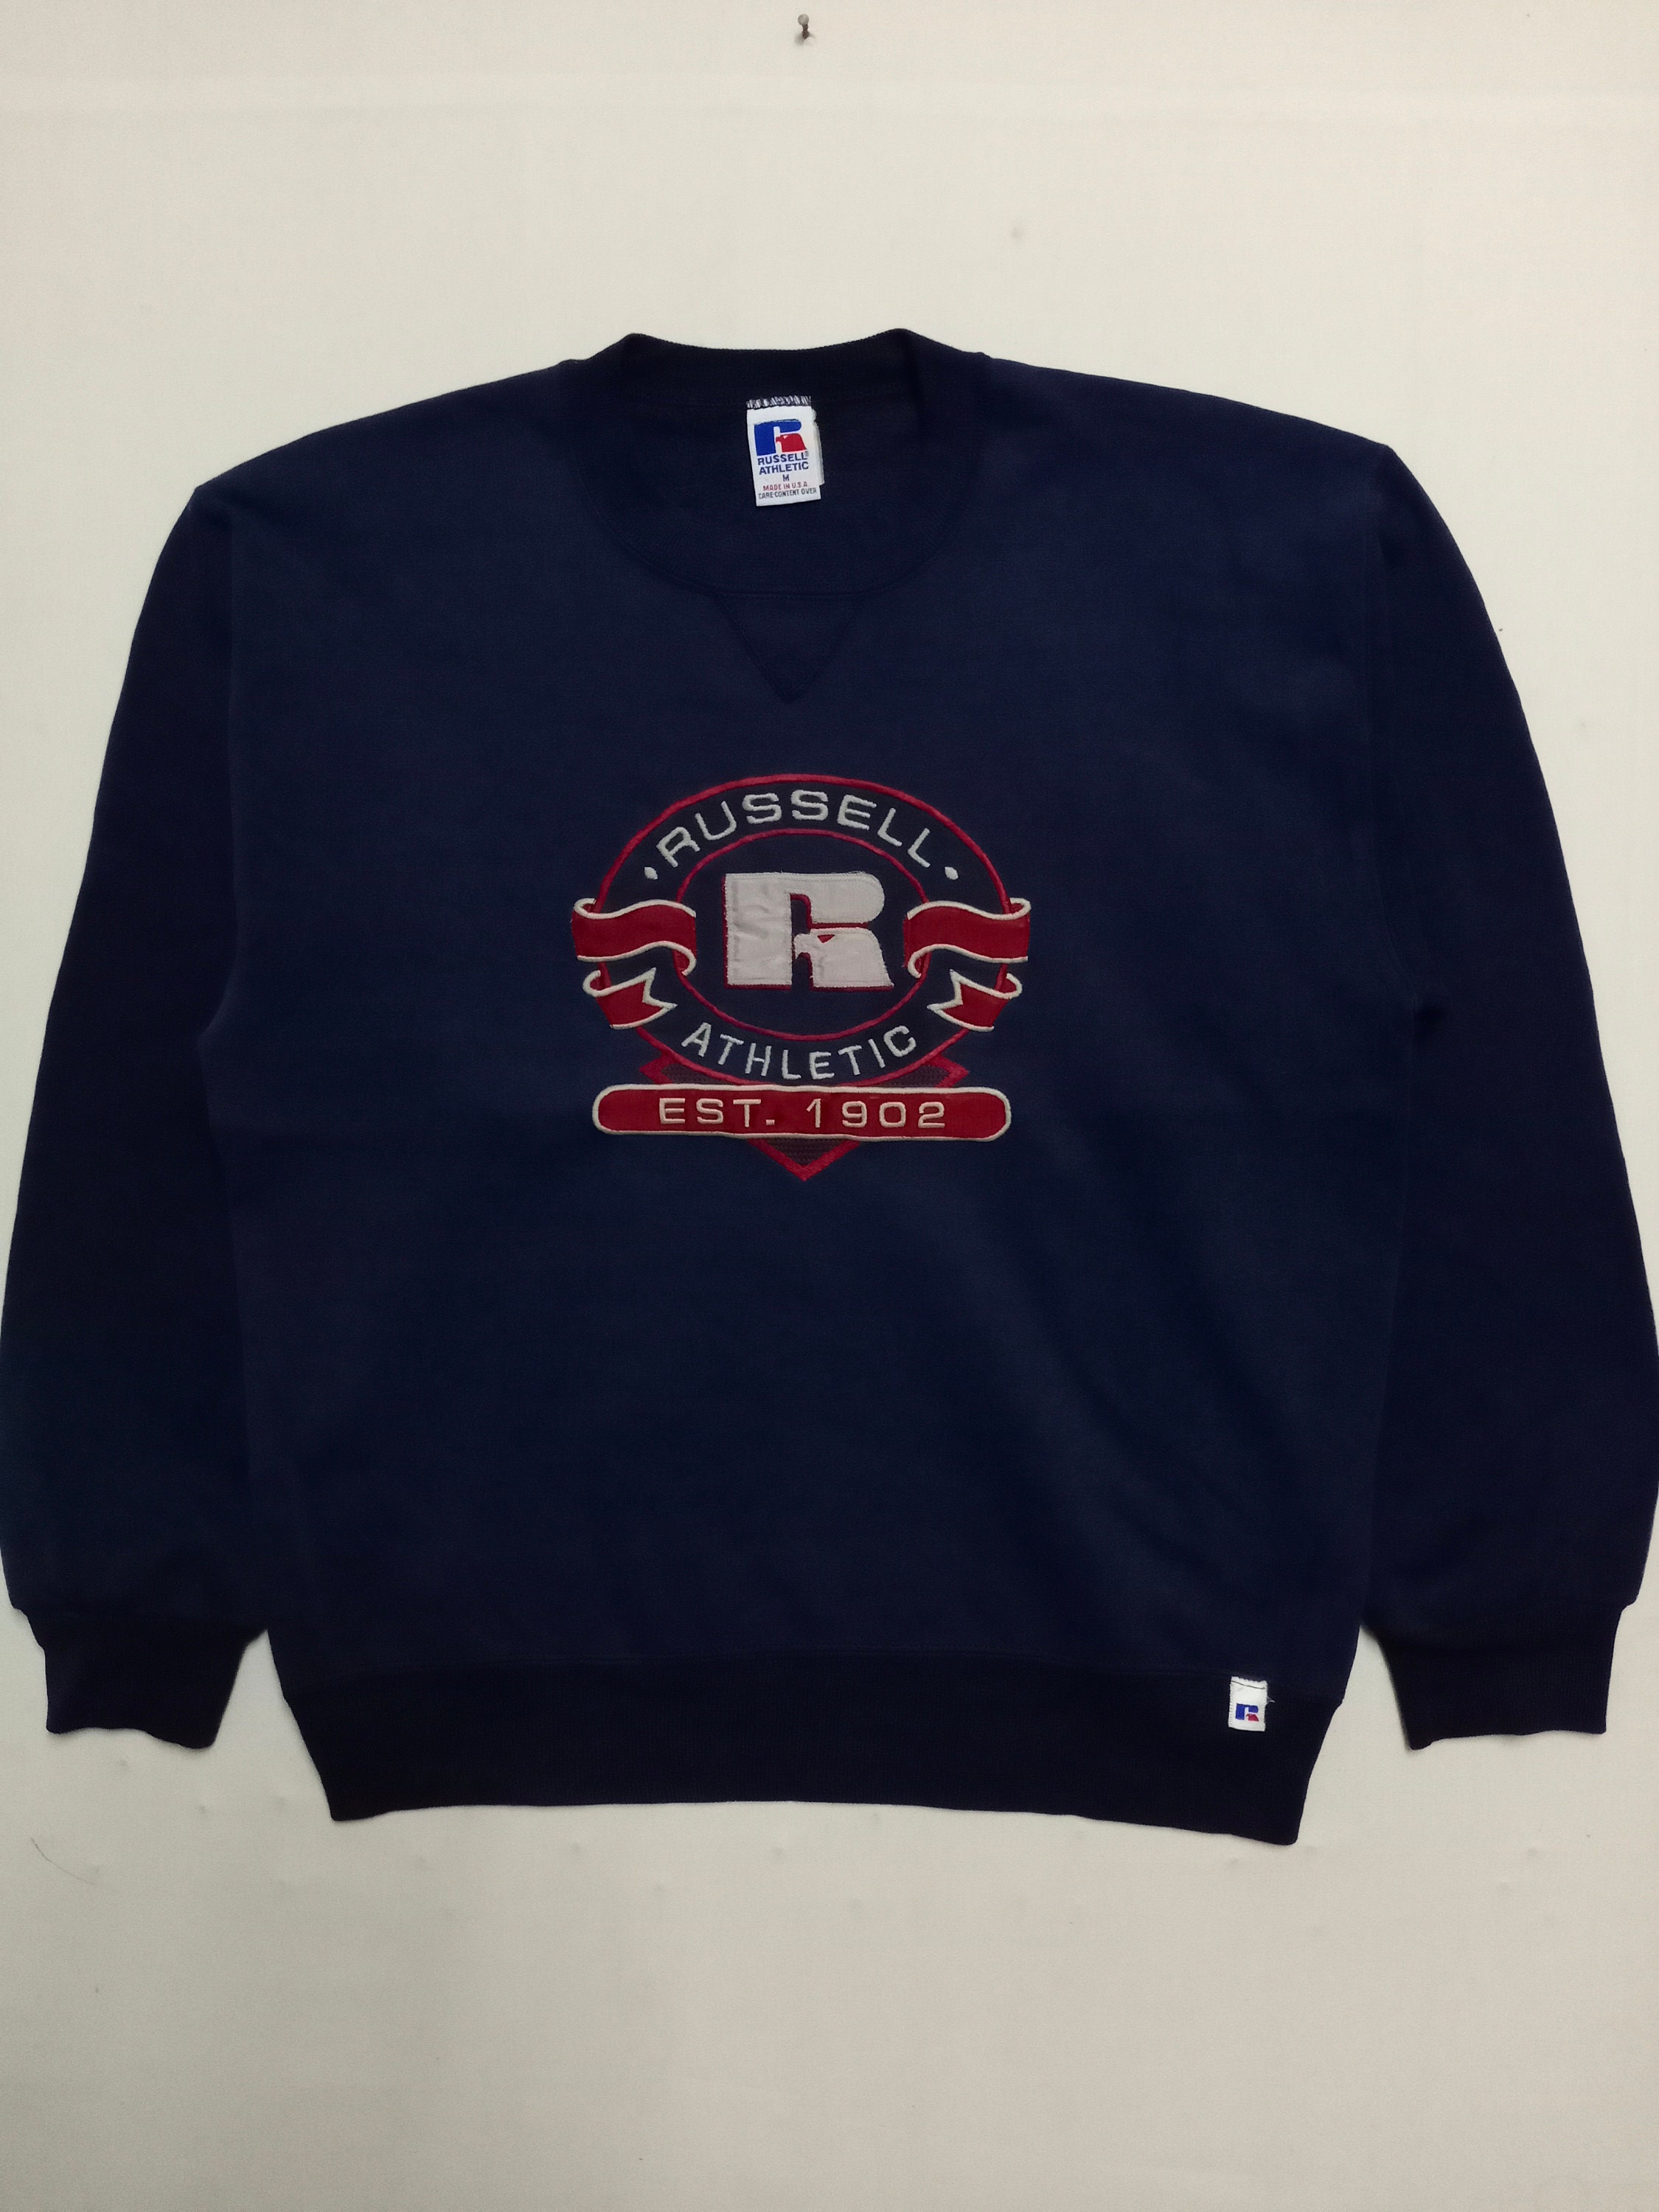 Vintage 90s Russel Athletic Spellout Logo Sweatshirt | Etsy